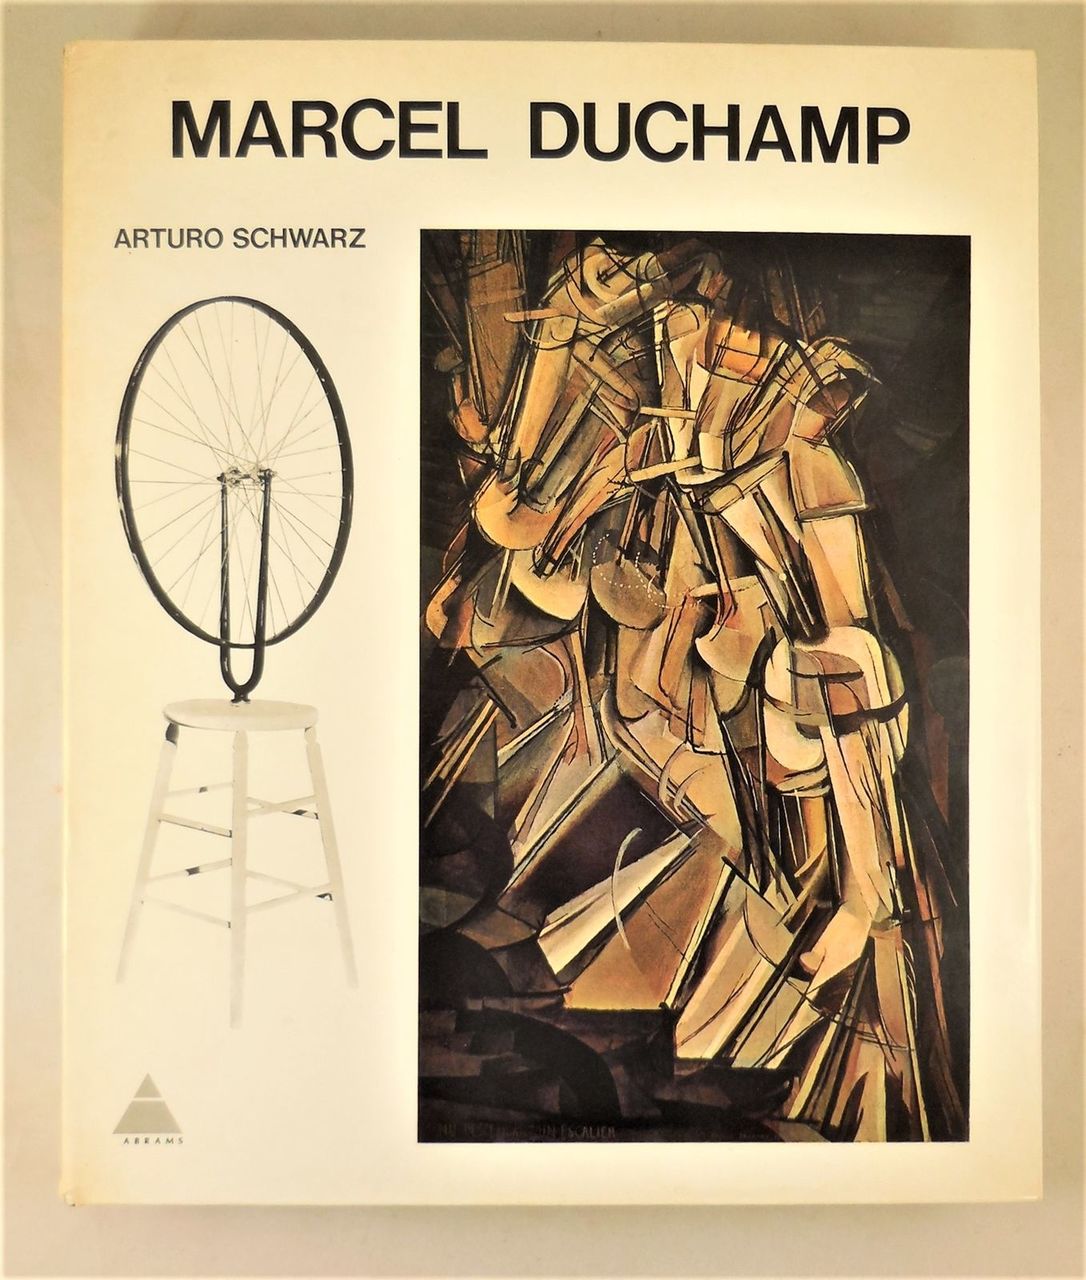 MARCEL DUCHAMP, by Arturo Schwarz - 1975 [1st Ed]